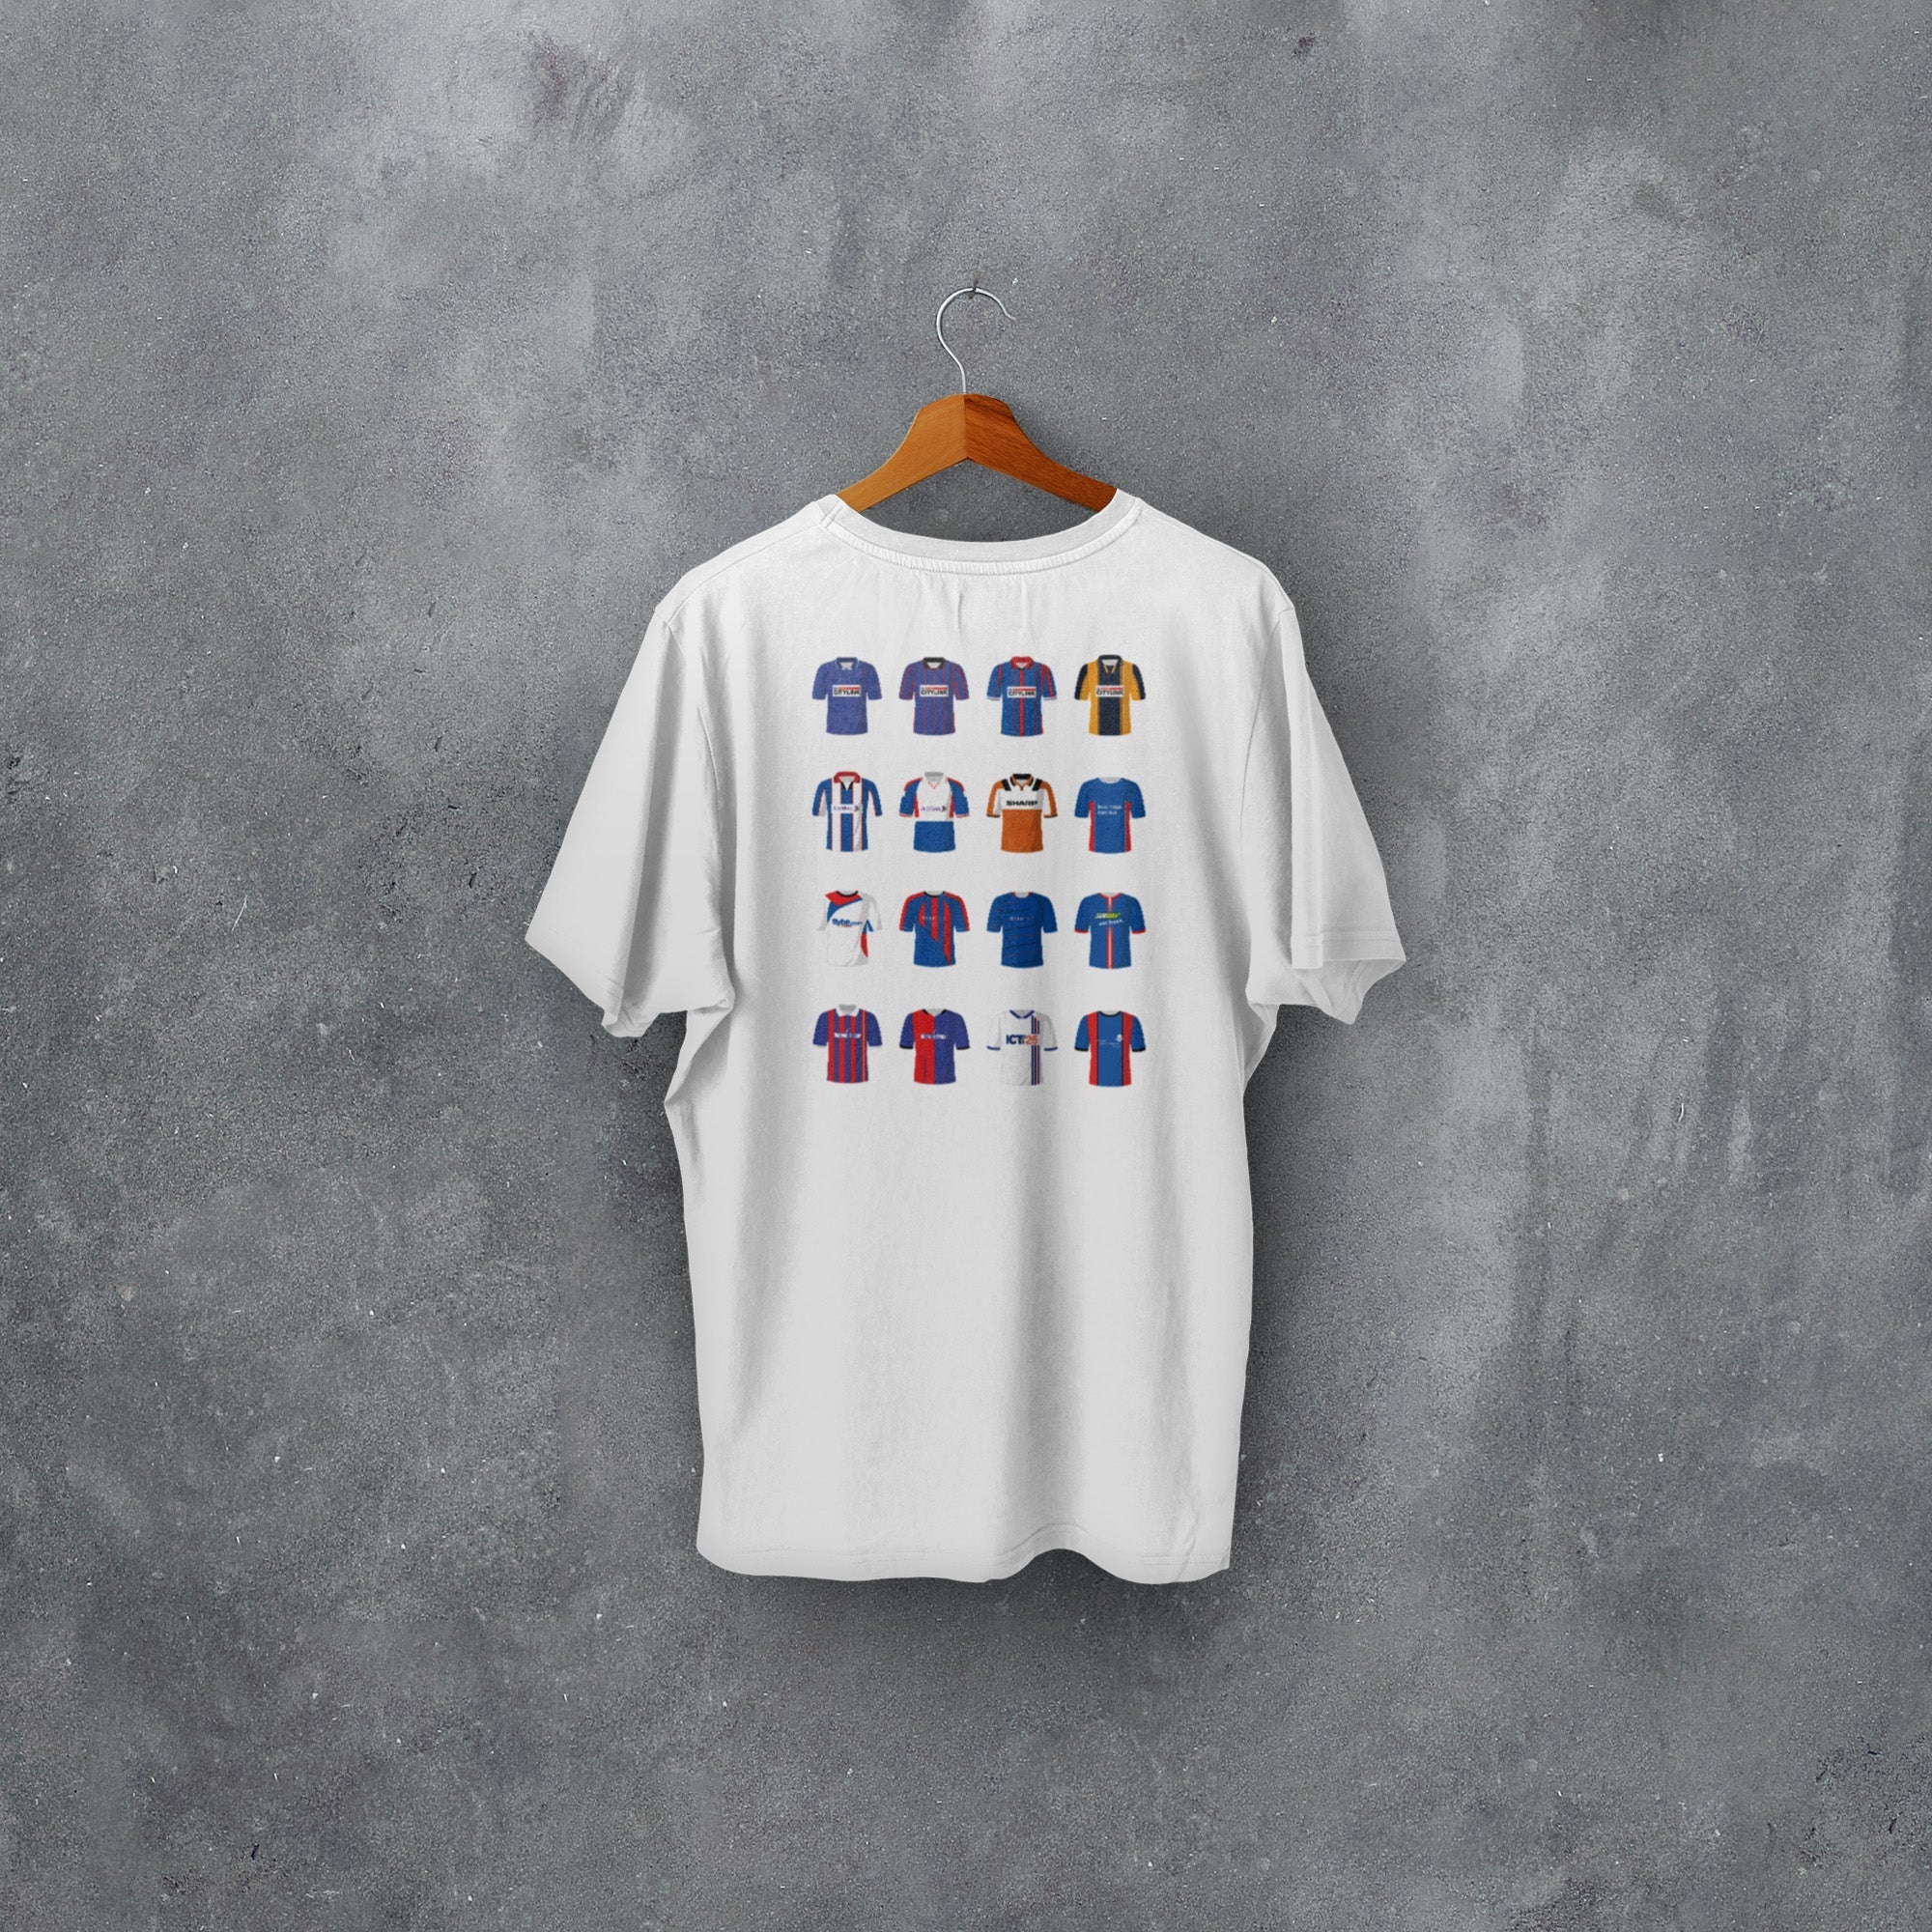 Inverness Classic Kits Football T-Shirt